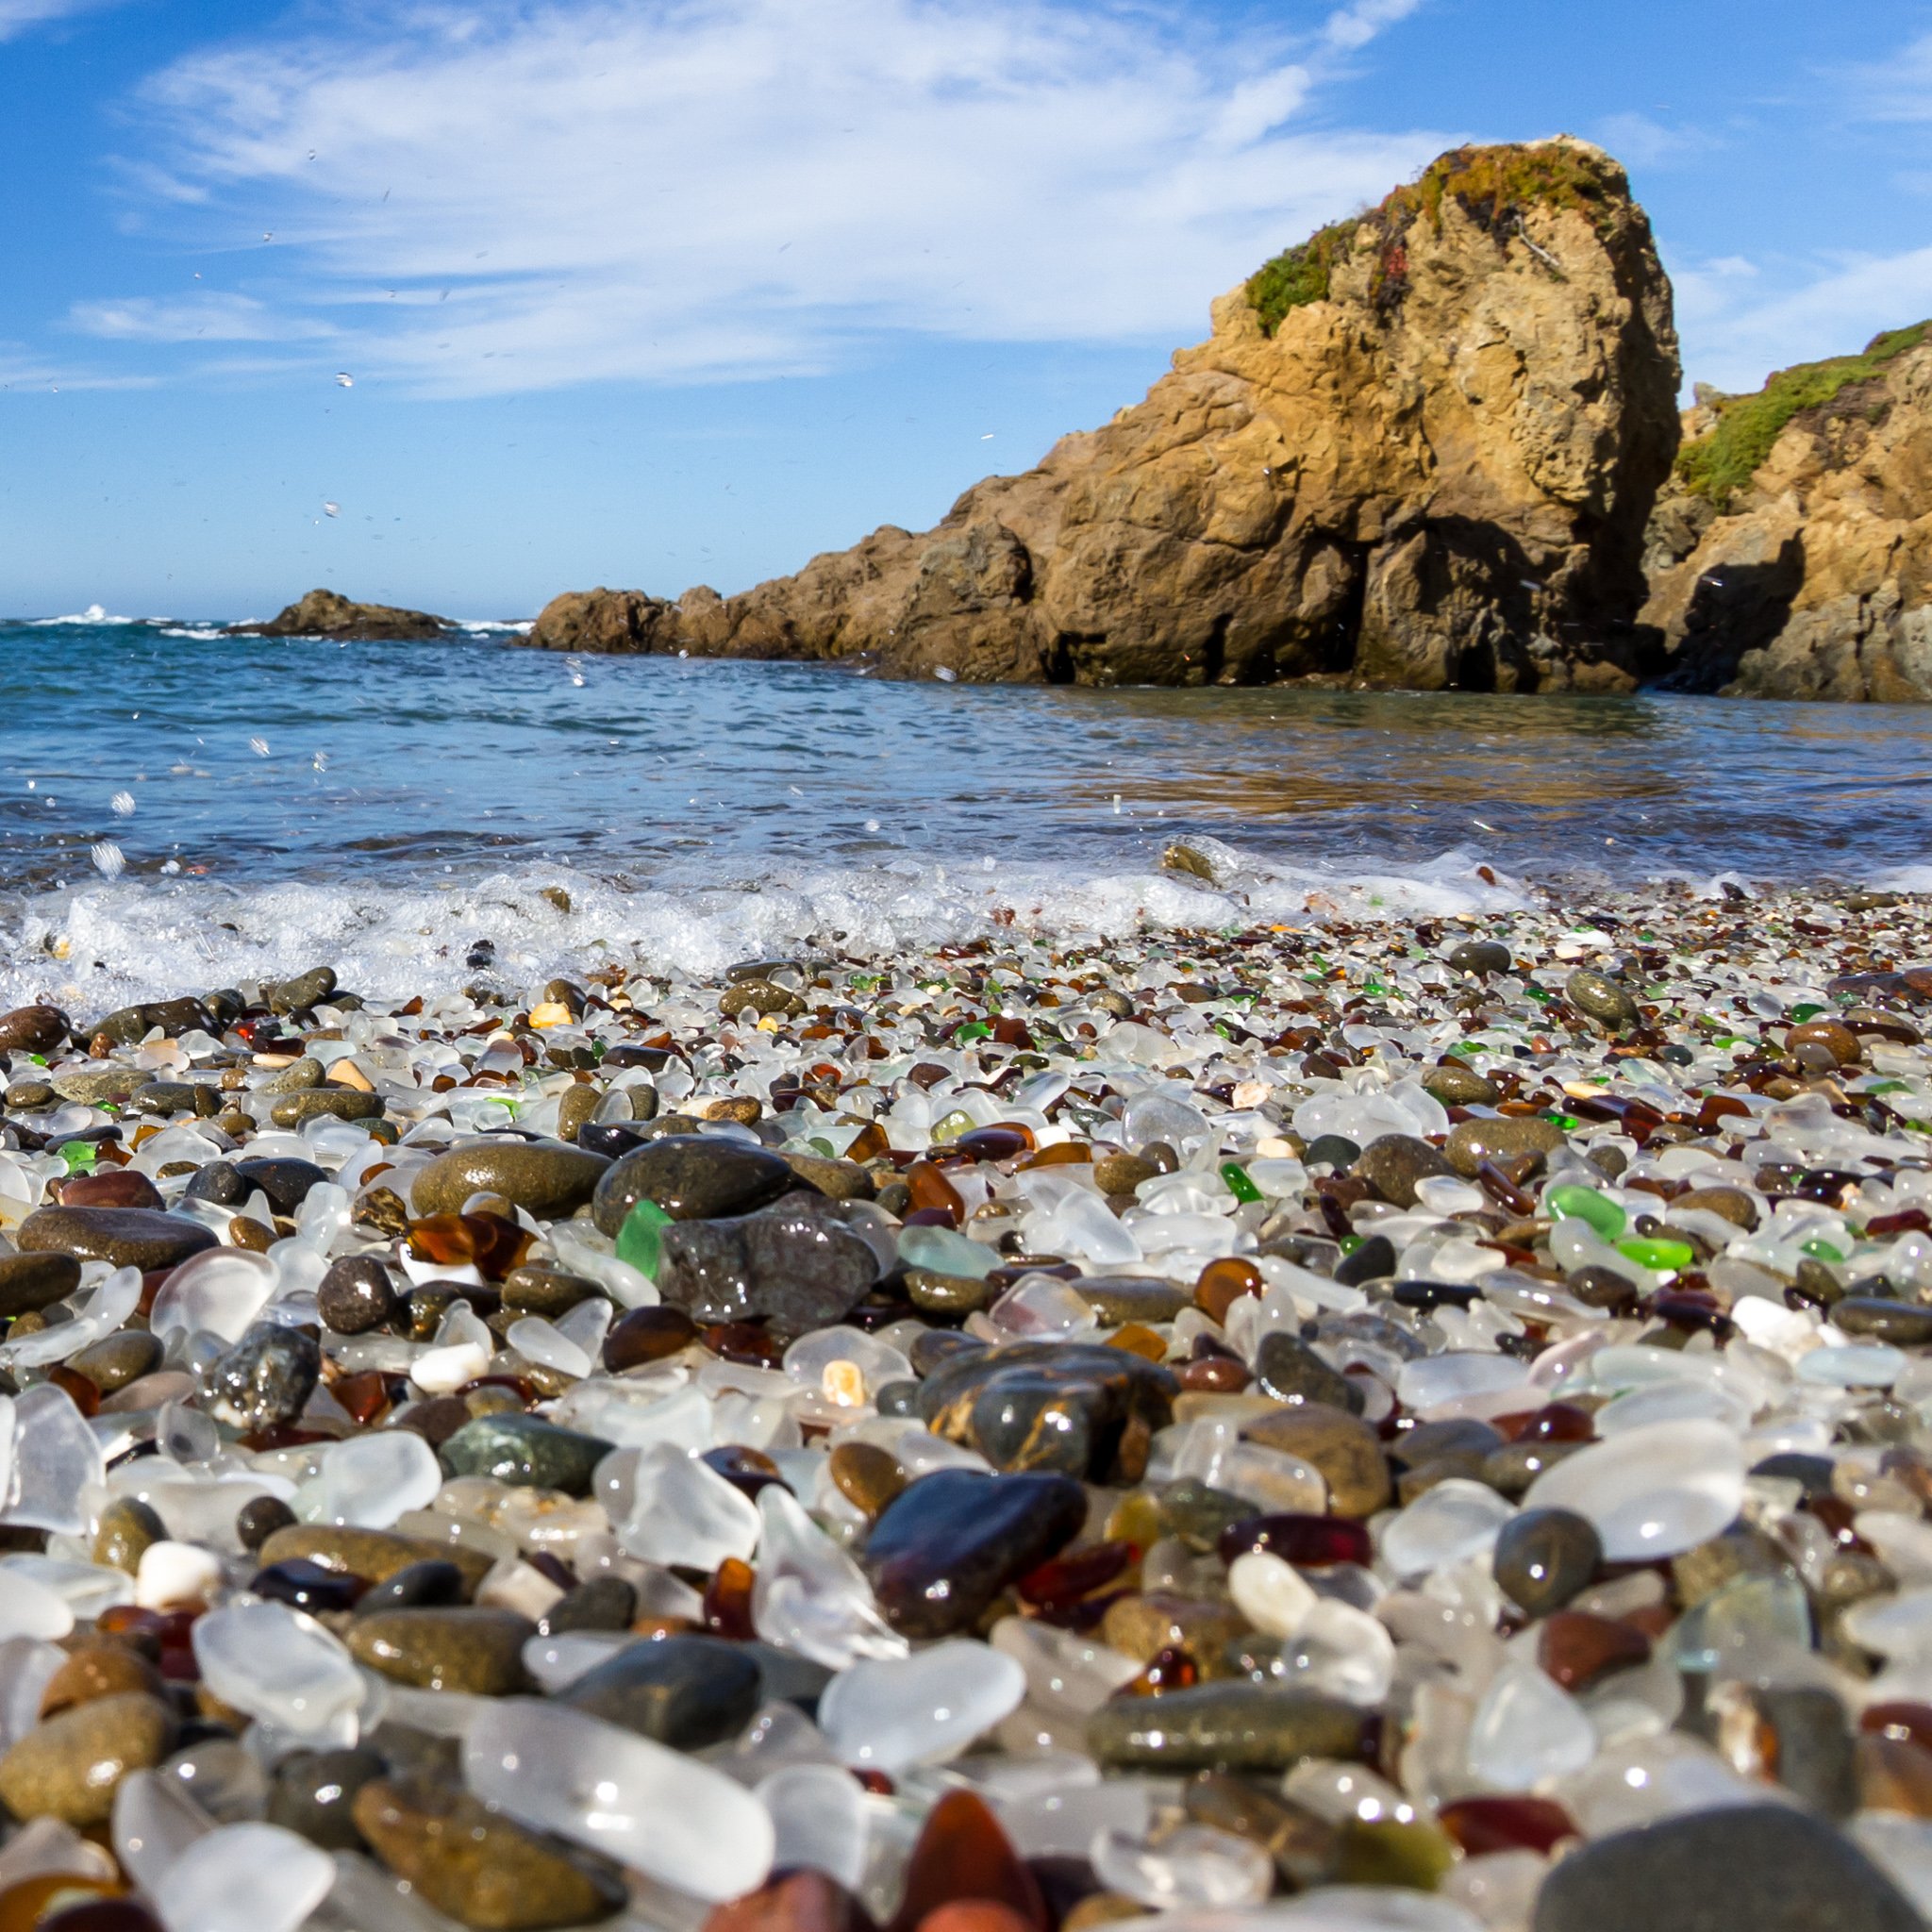 California Beaches Where You Can Find Sea Glass - California Beaches